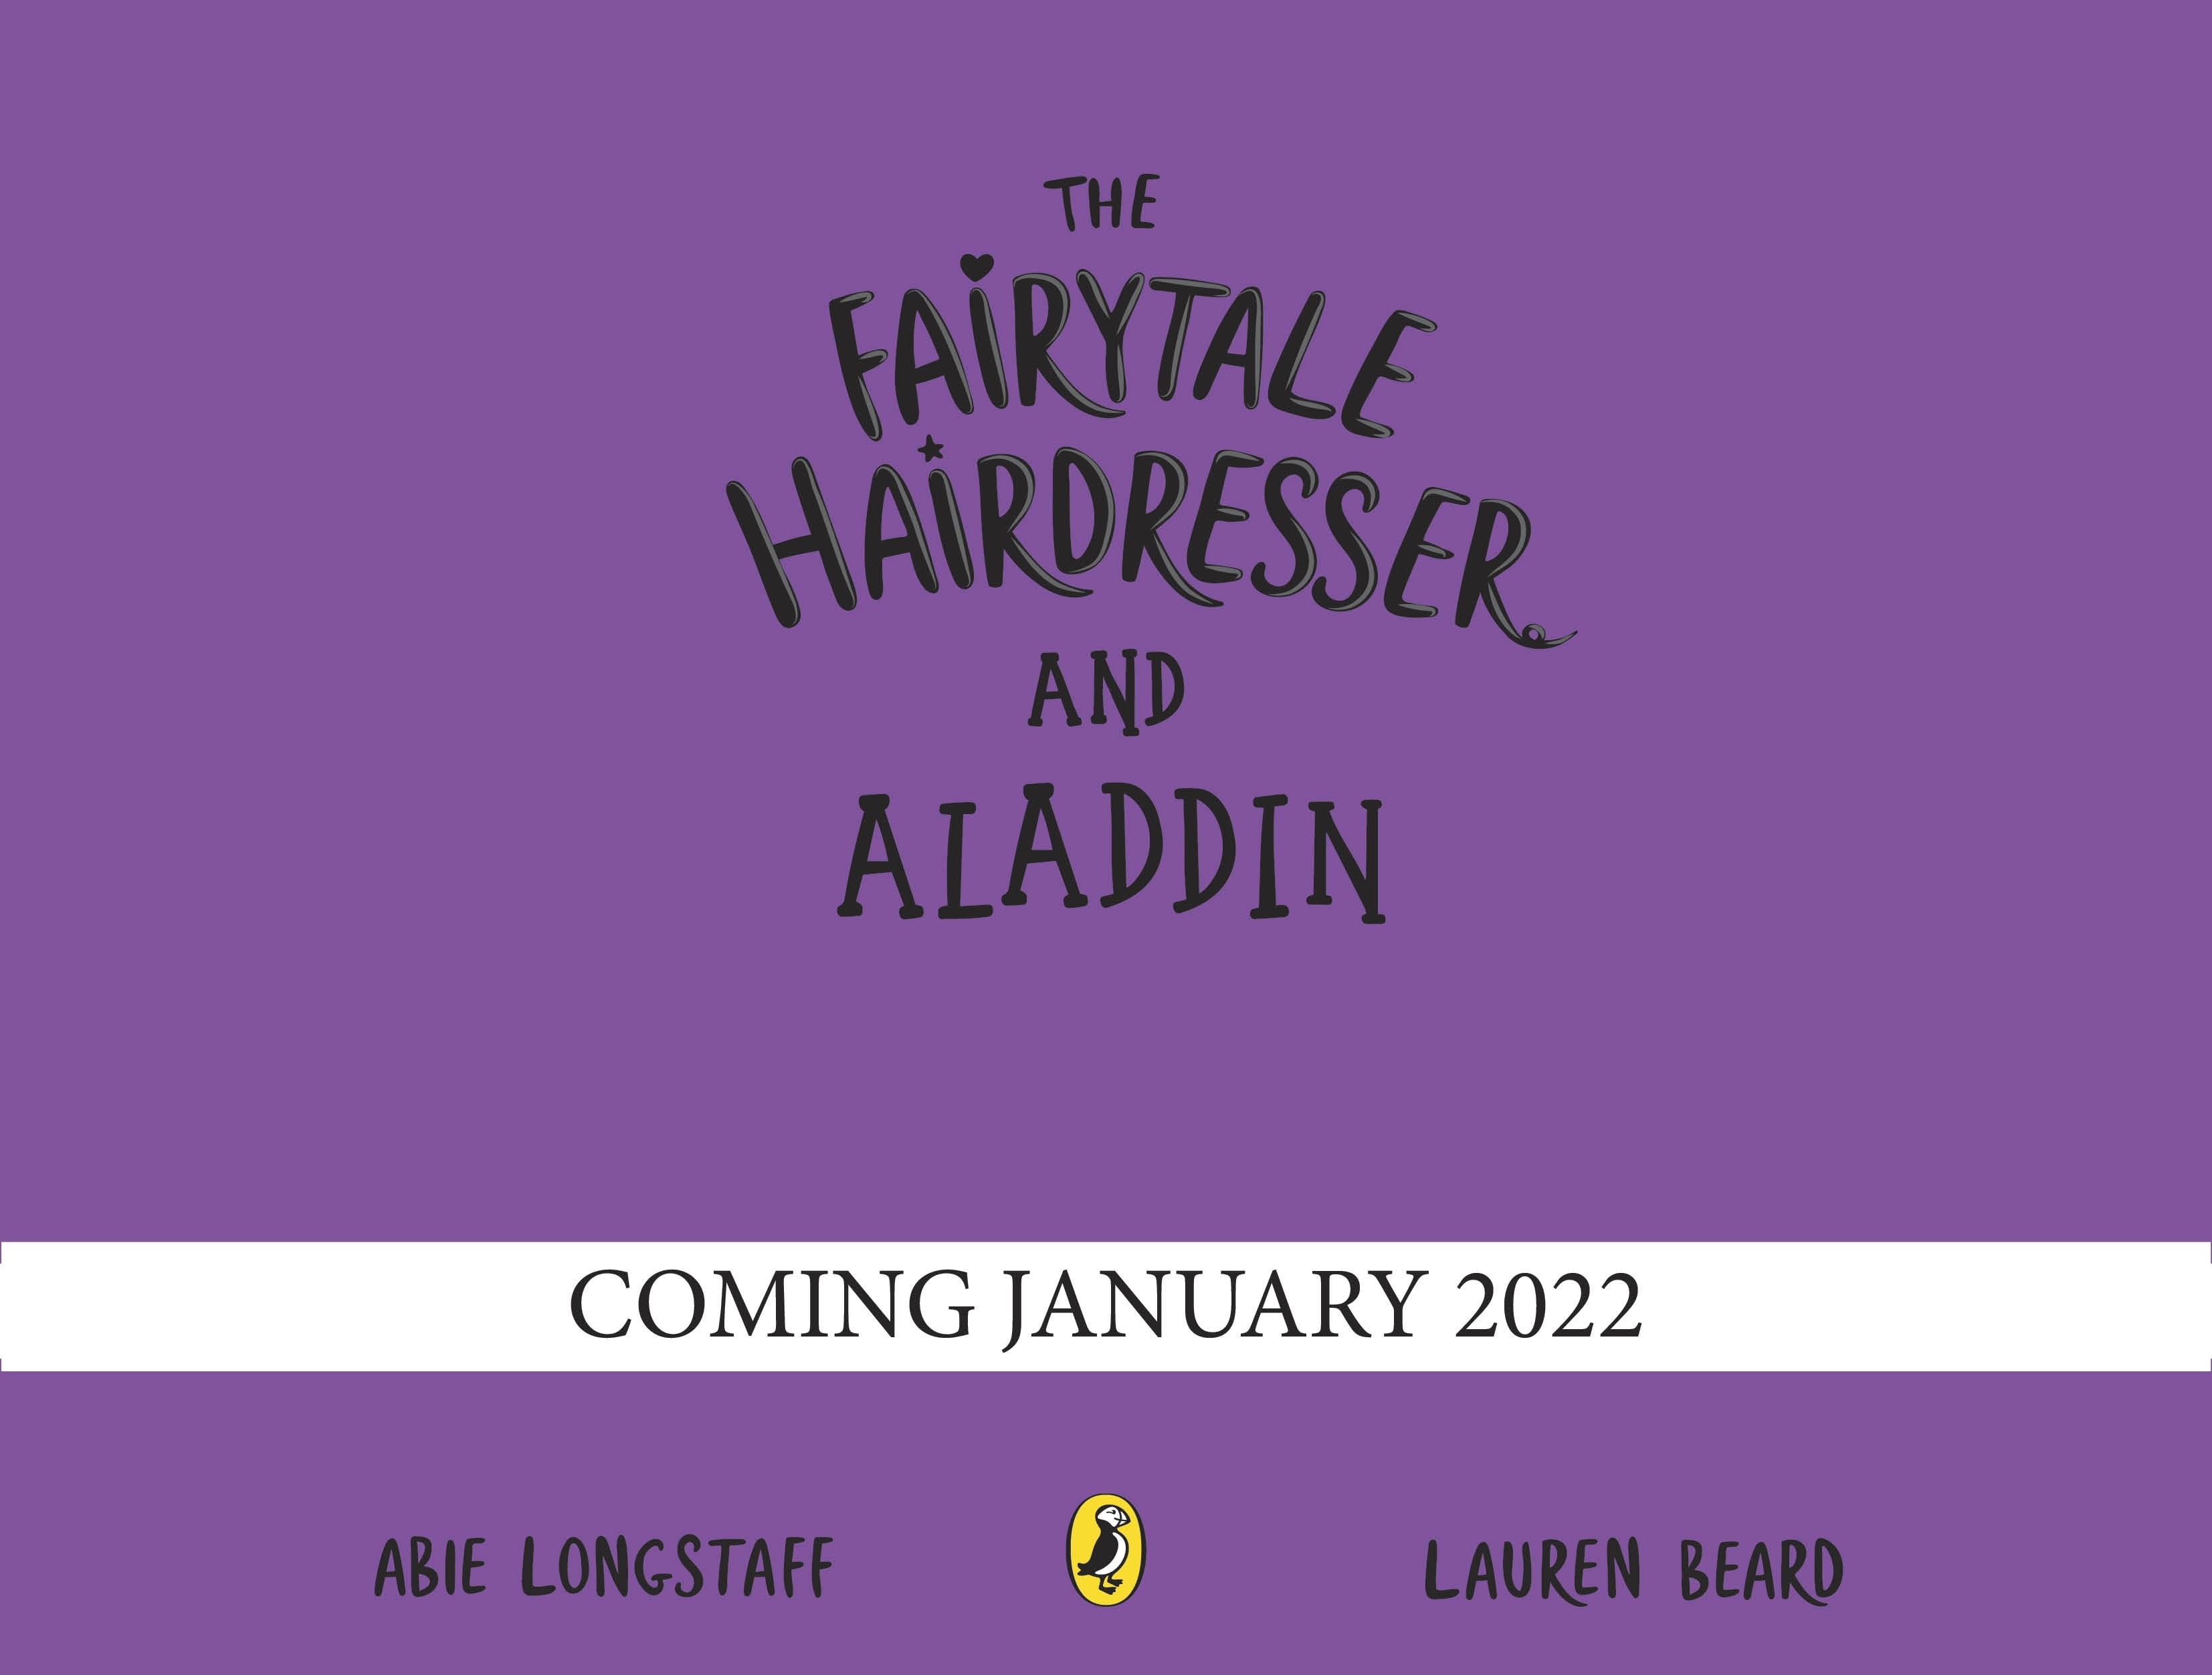 Book “The Fairytale Hairdresser and Aladdin” by Abie Longstaff — January 6, 2022